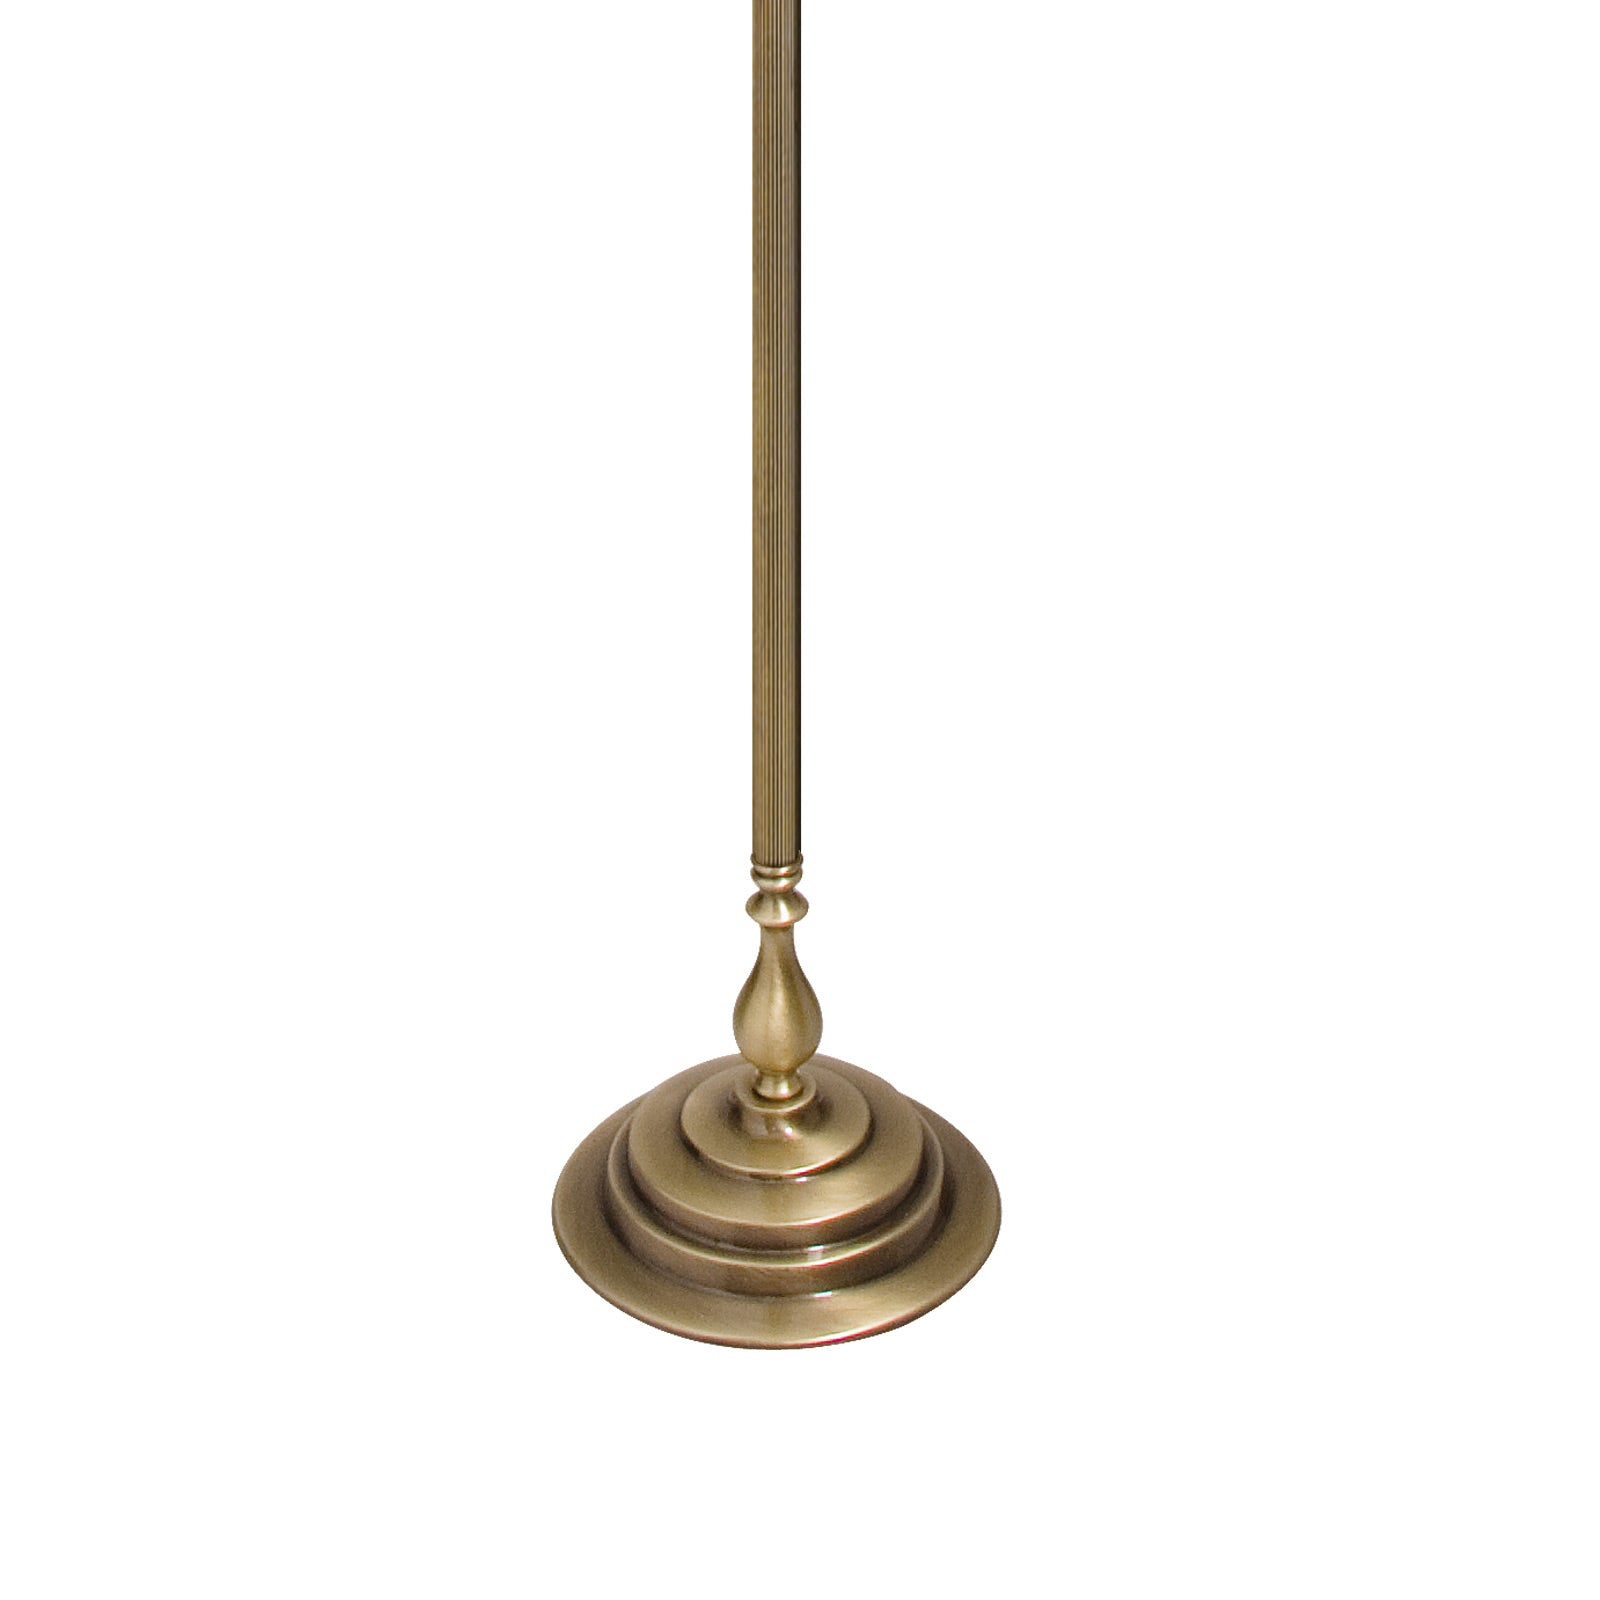 t4option0_0 | Bronze Swing Arm Floor Lamp Real Brass White Cloth Ghidini 1849